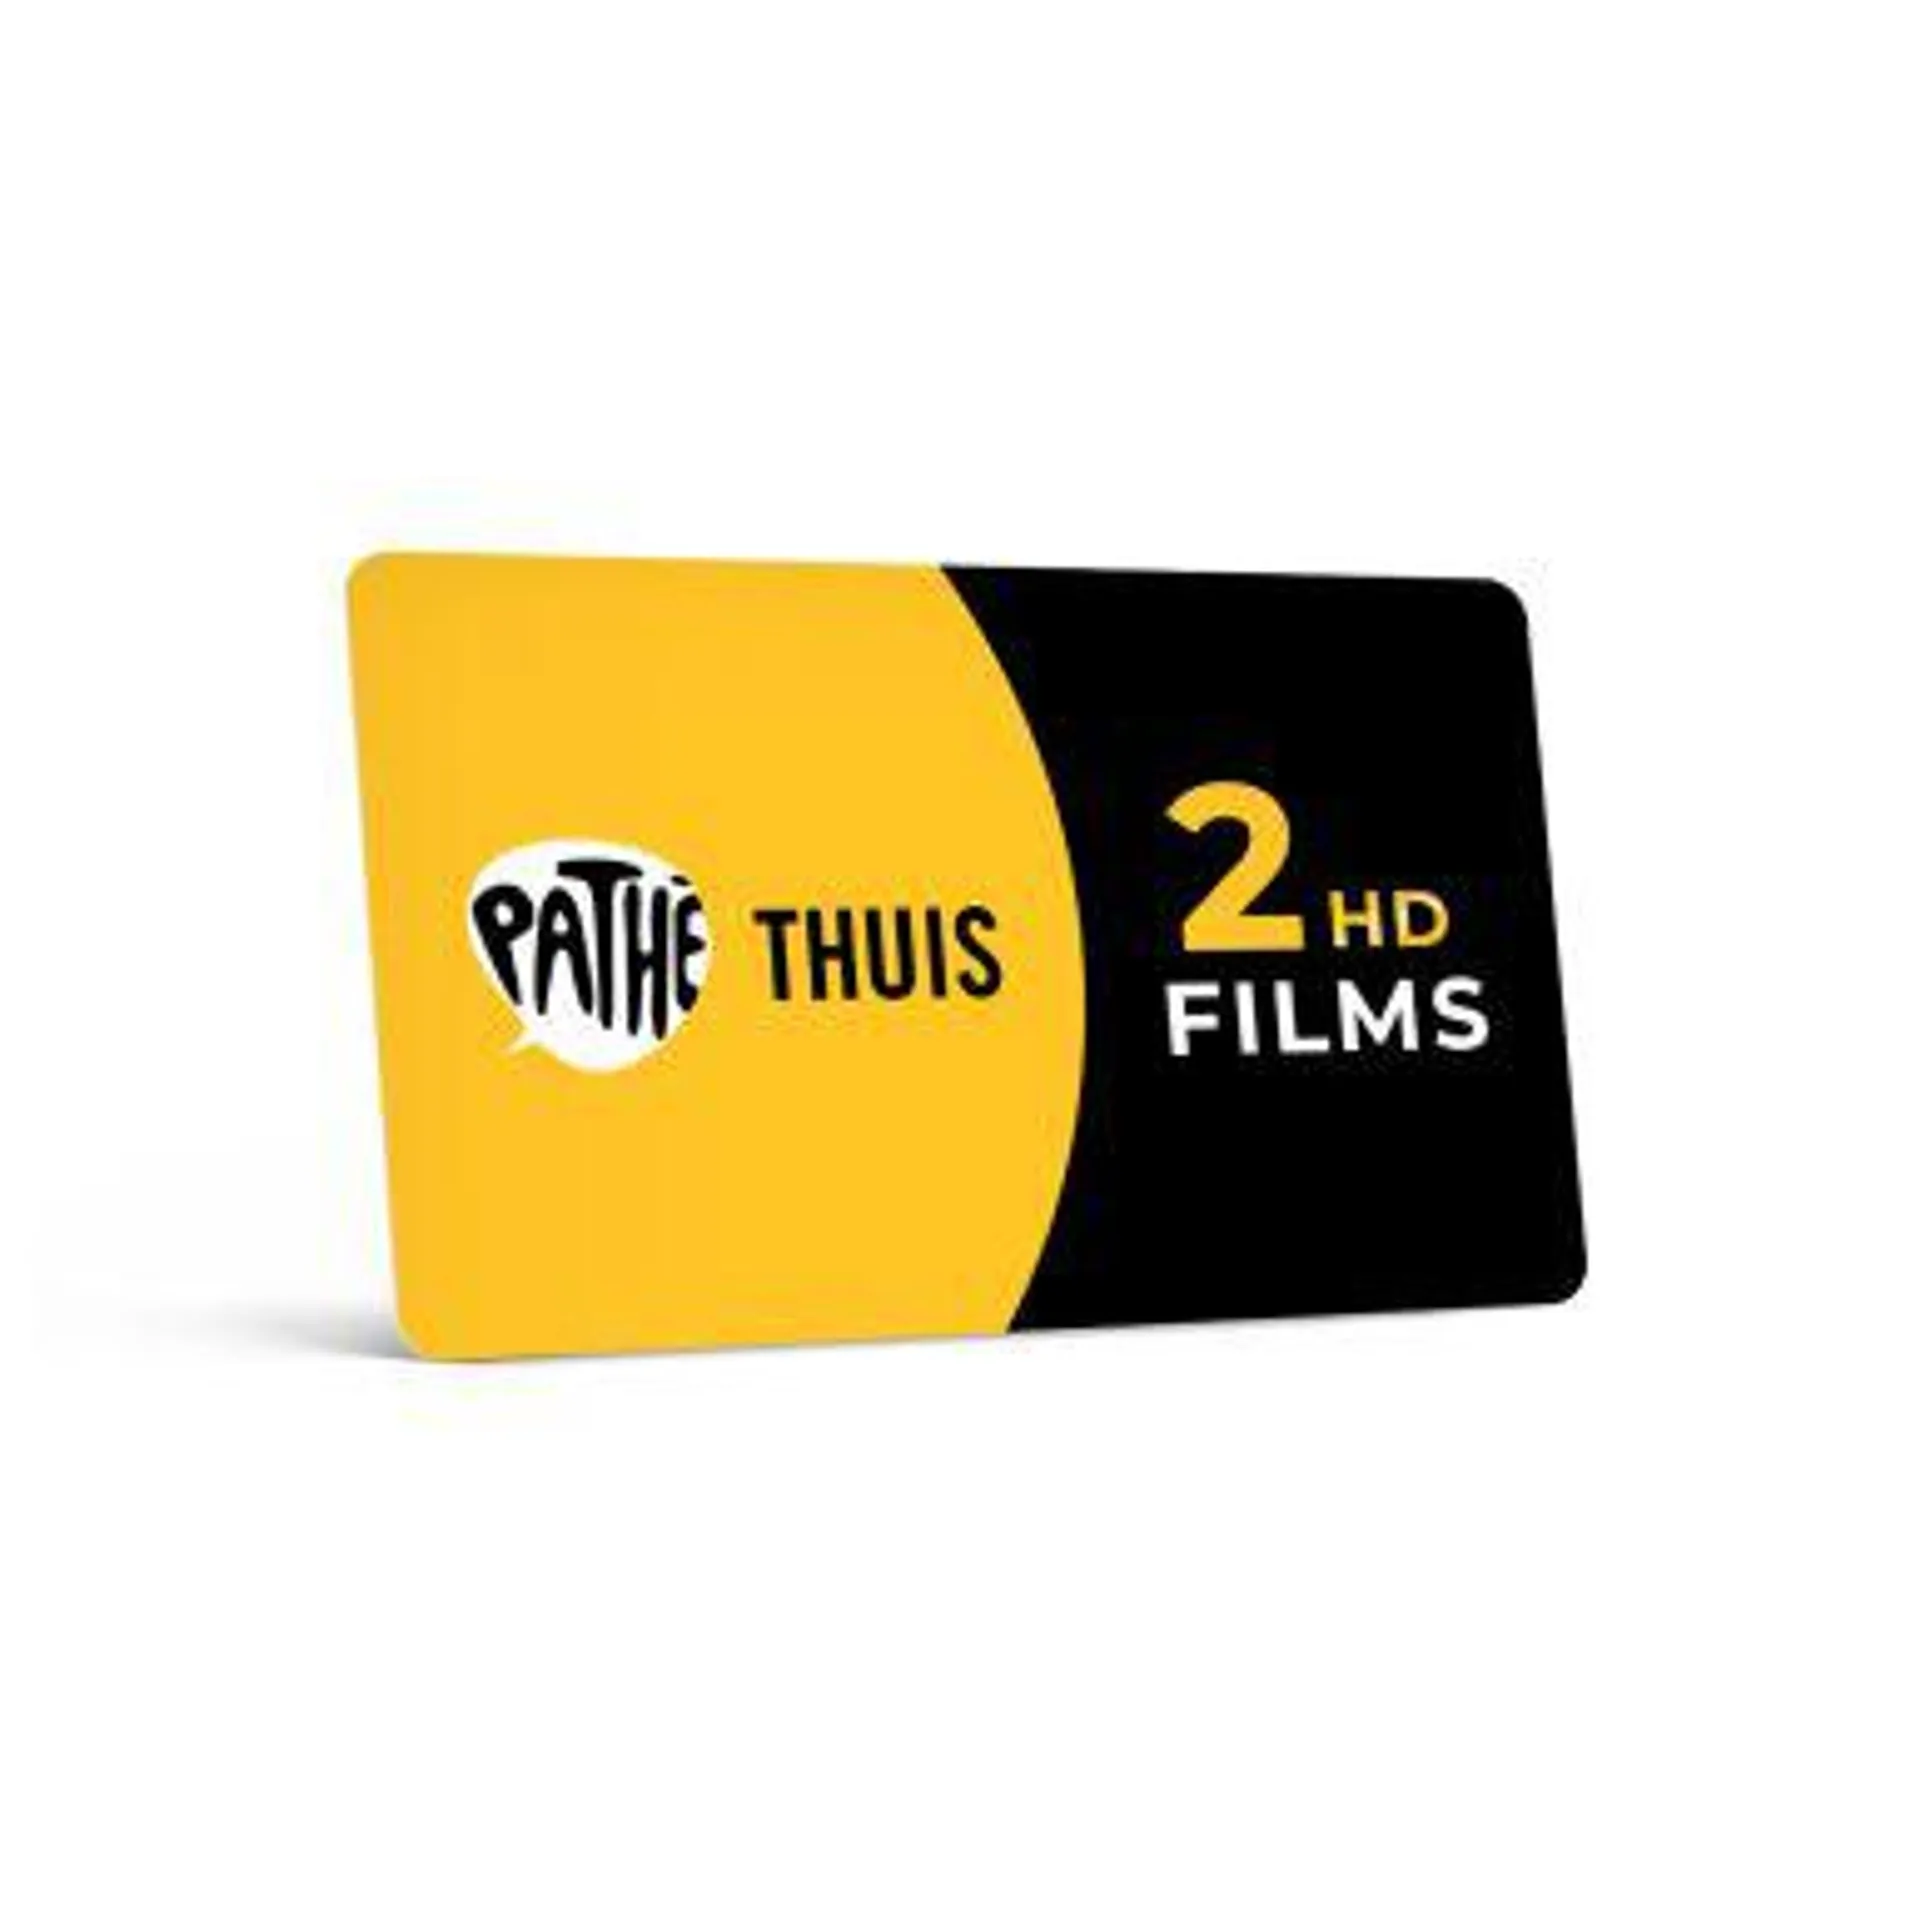 Pathé Thuis 2x HD FILM